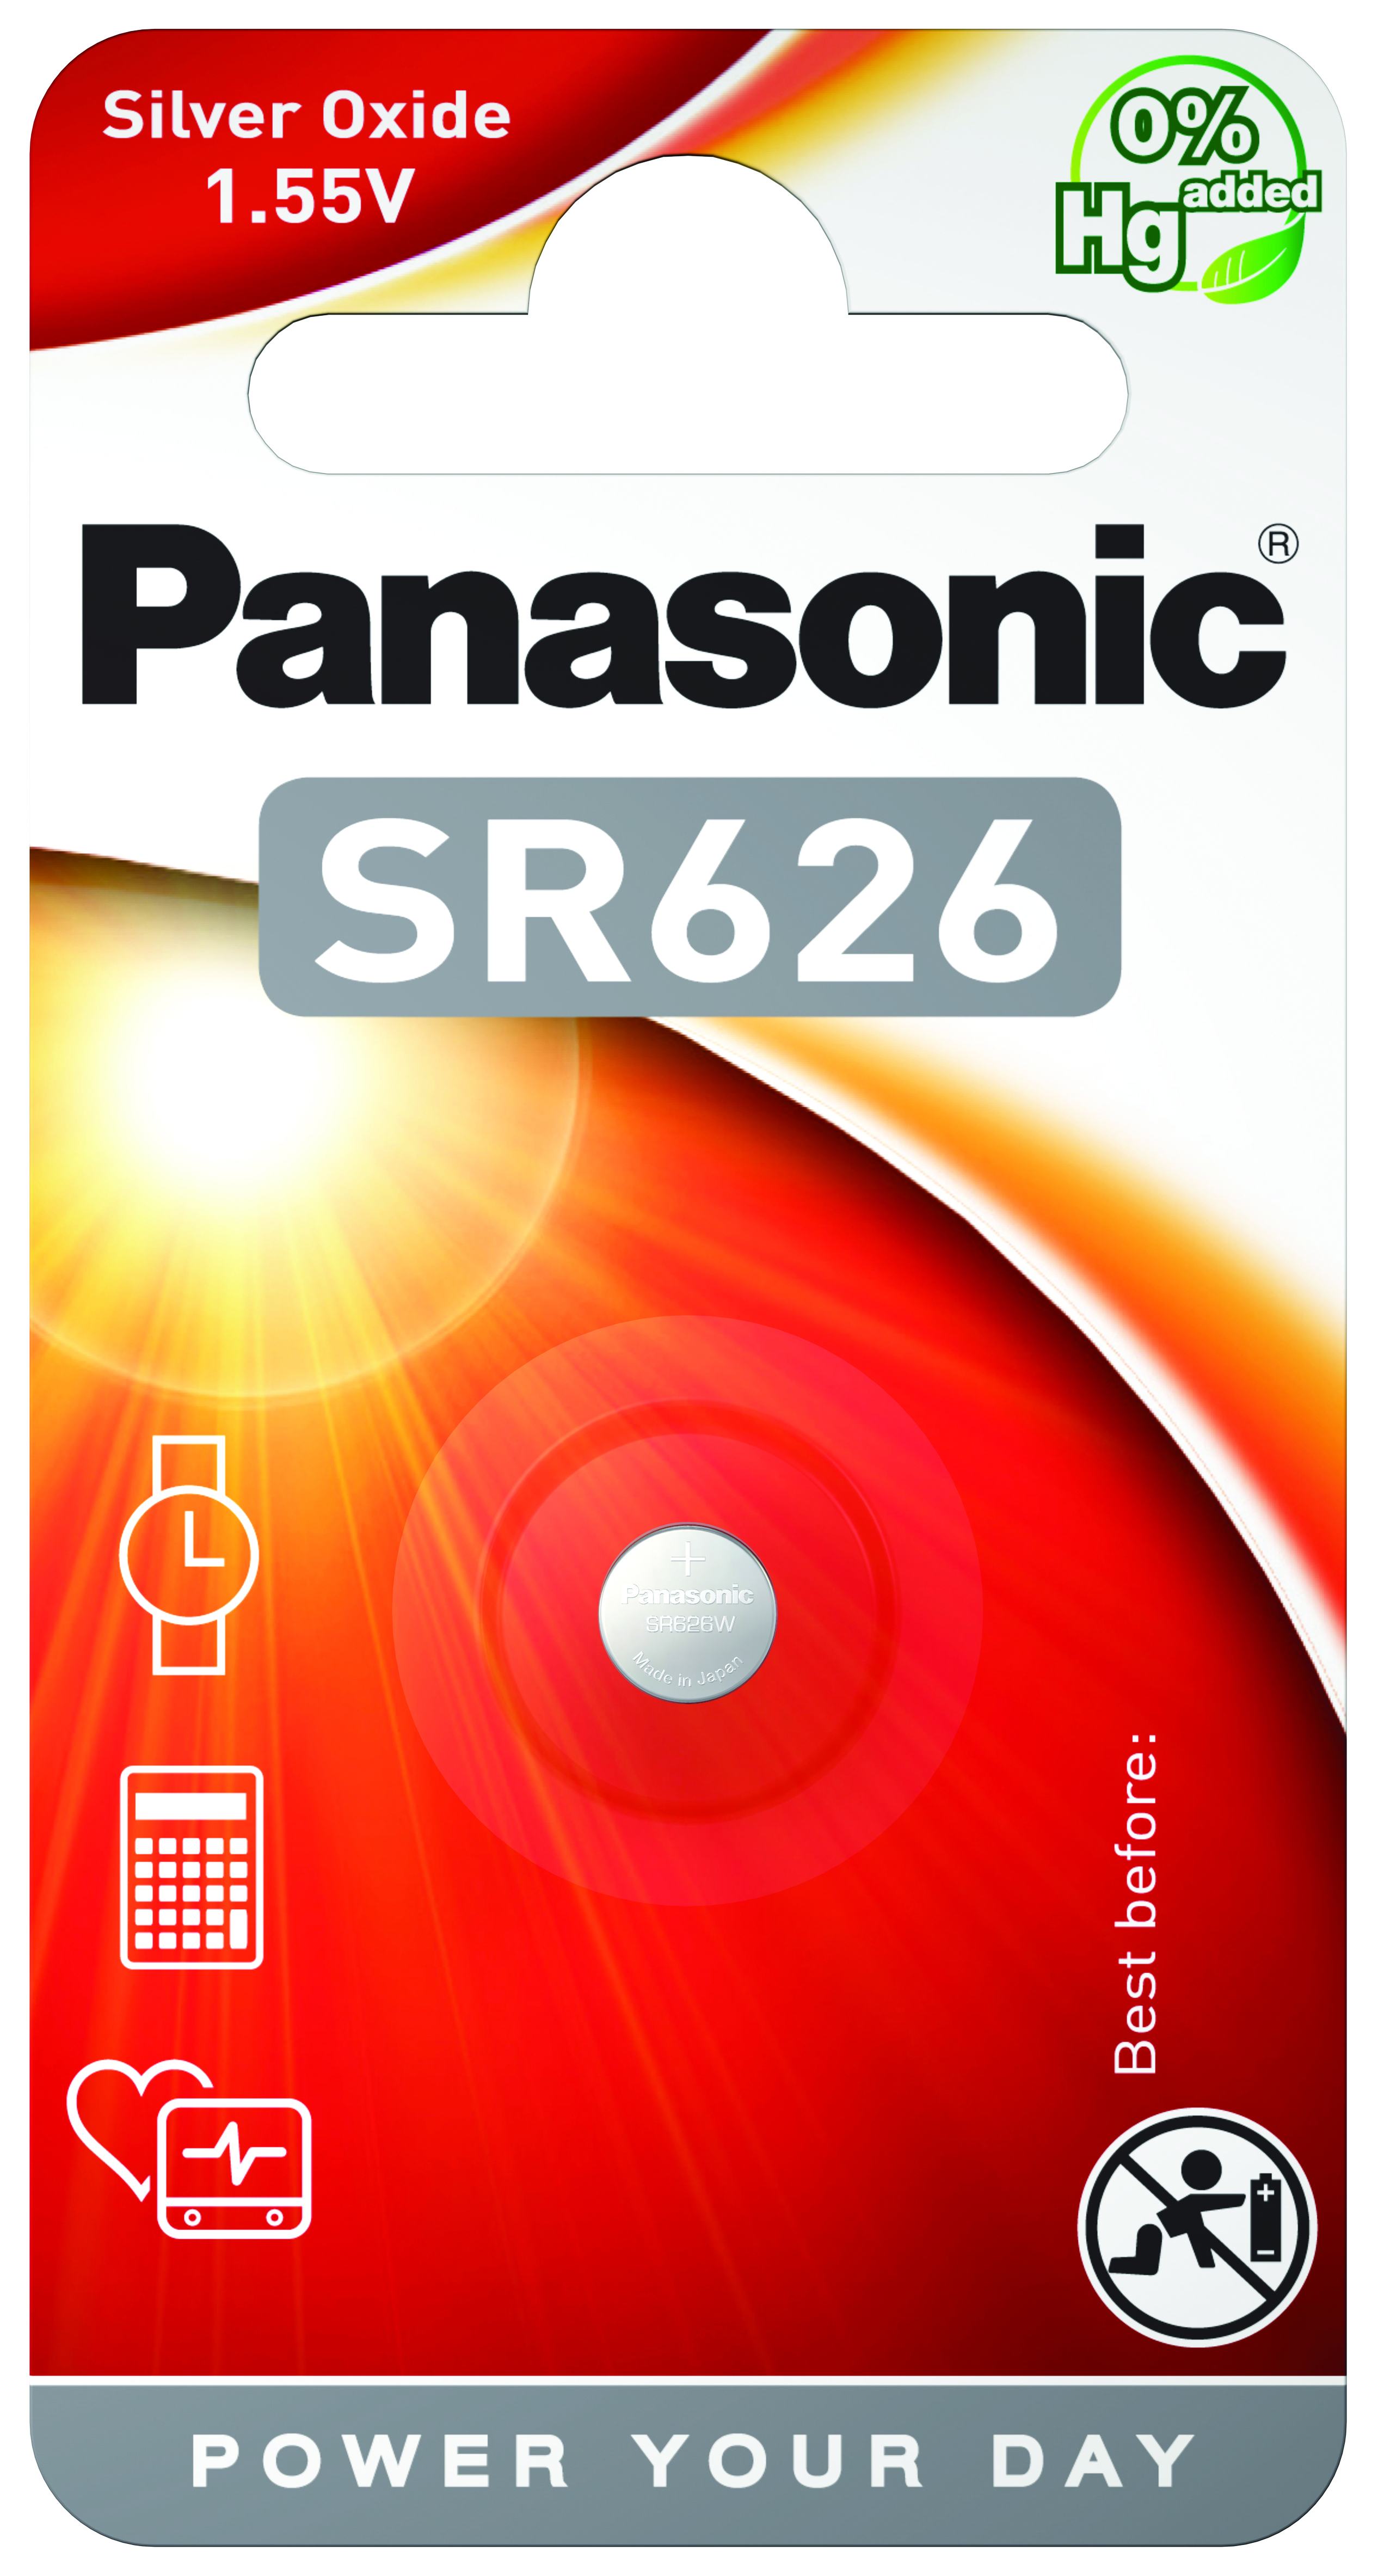 Panasonic SR626 (Silberoxid/Uhrenbatterien)